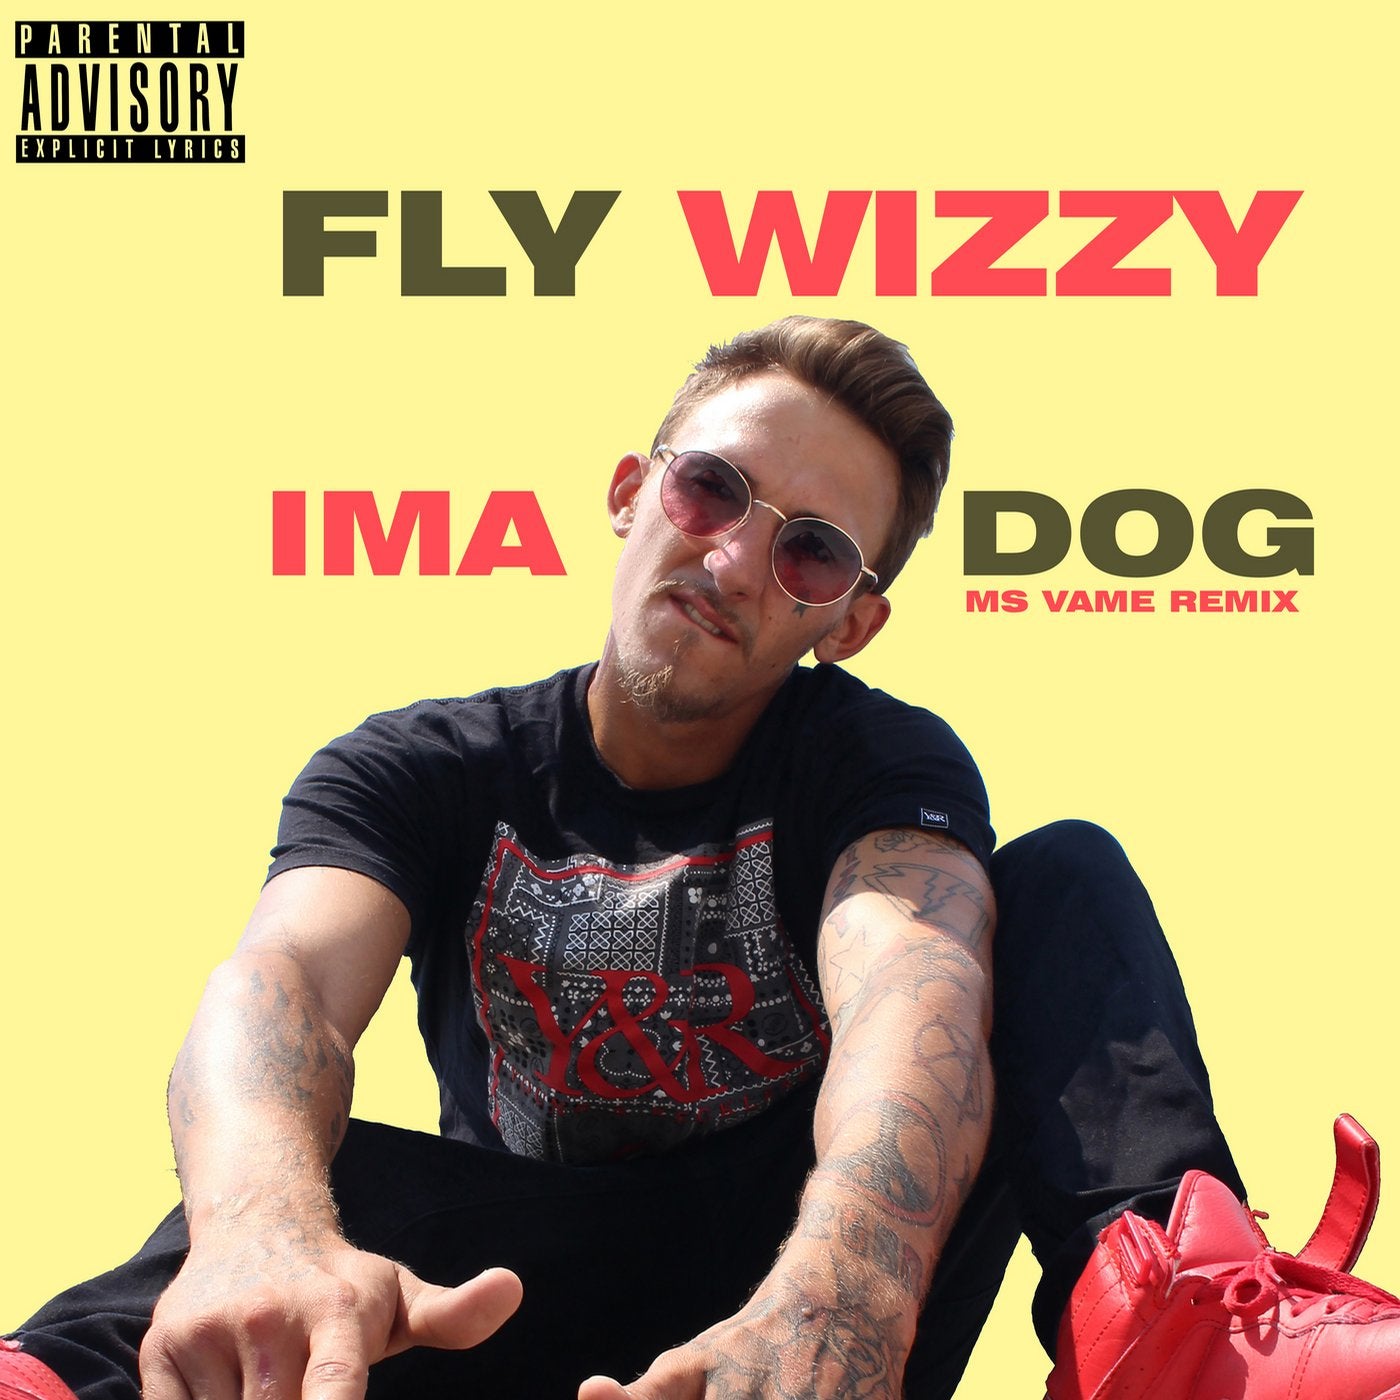 Ima Dog (Ms Vame Remix)